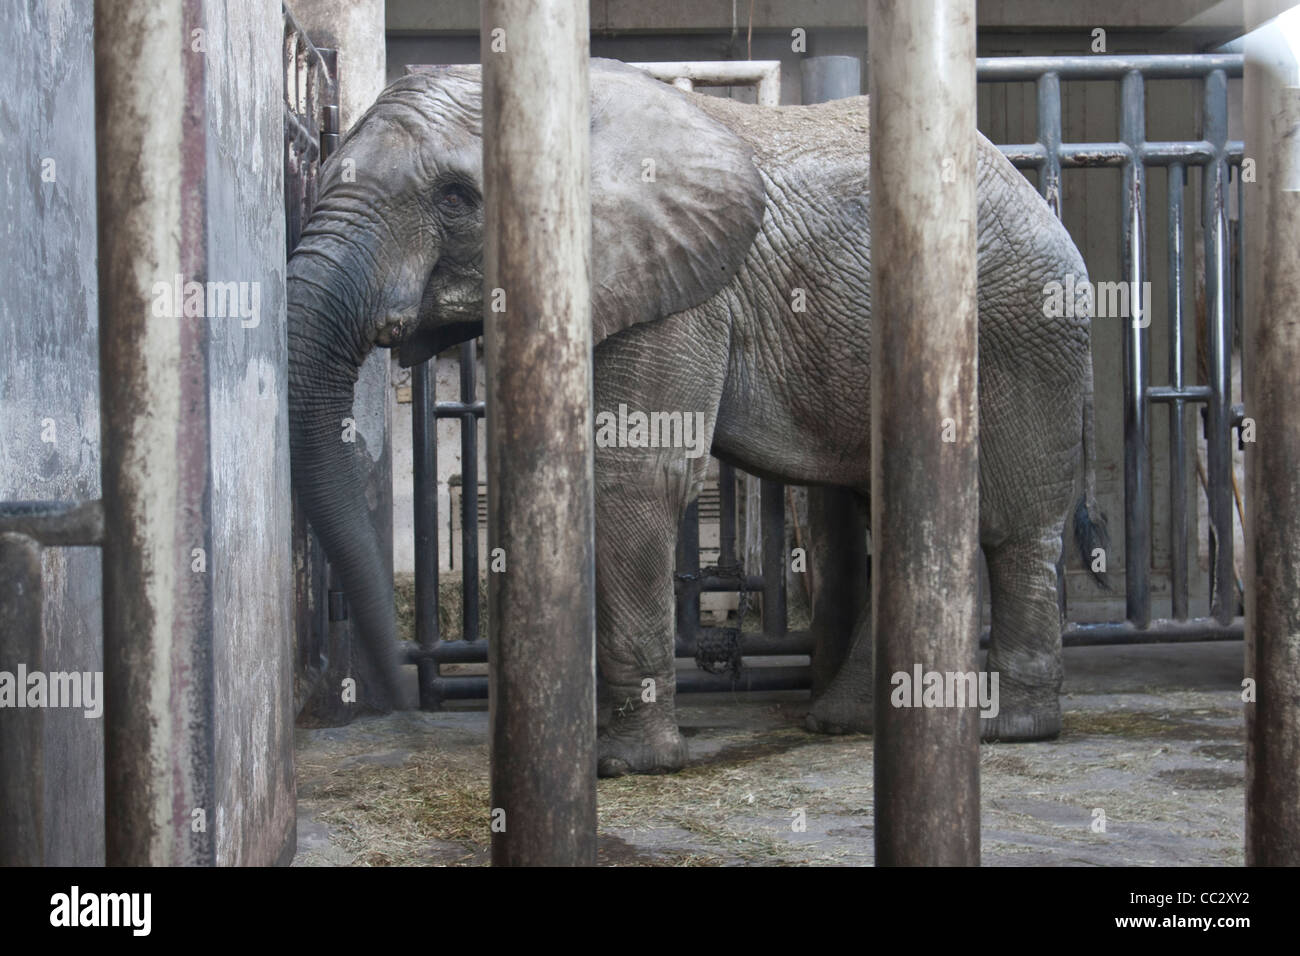 elephant in jail Stock Photo